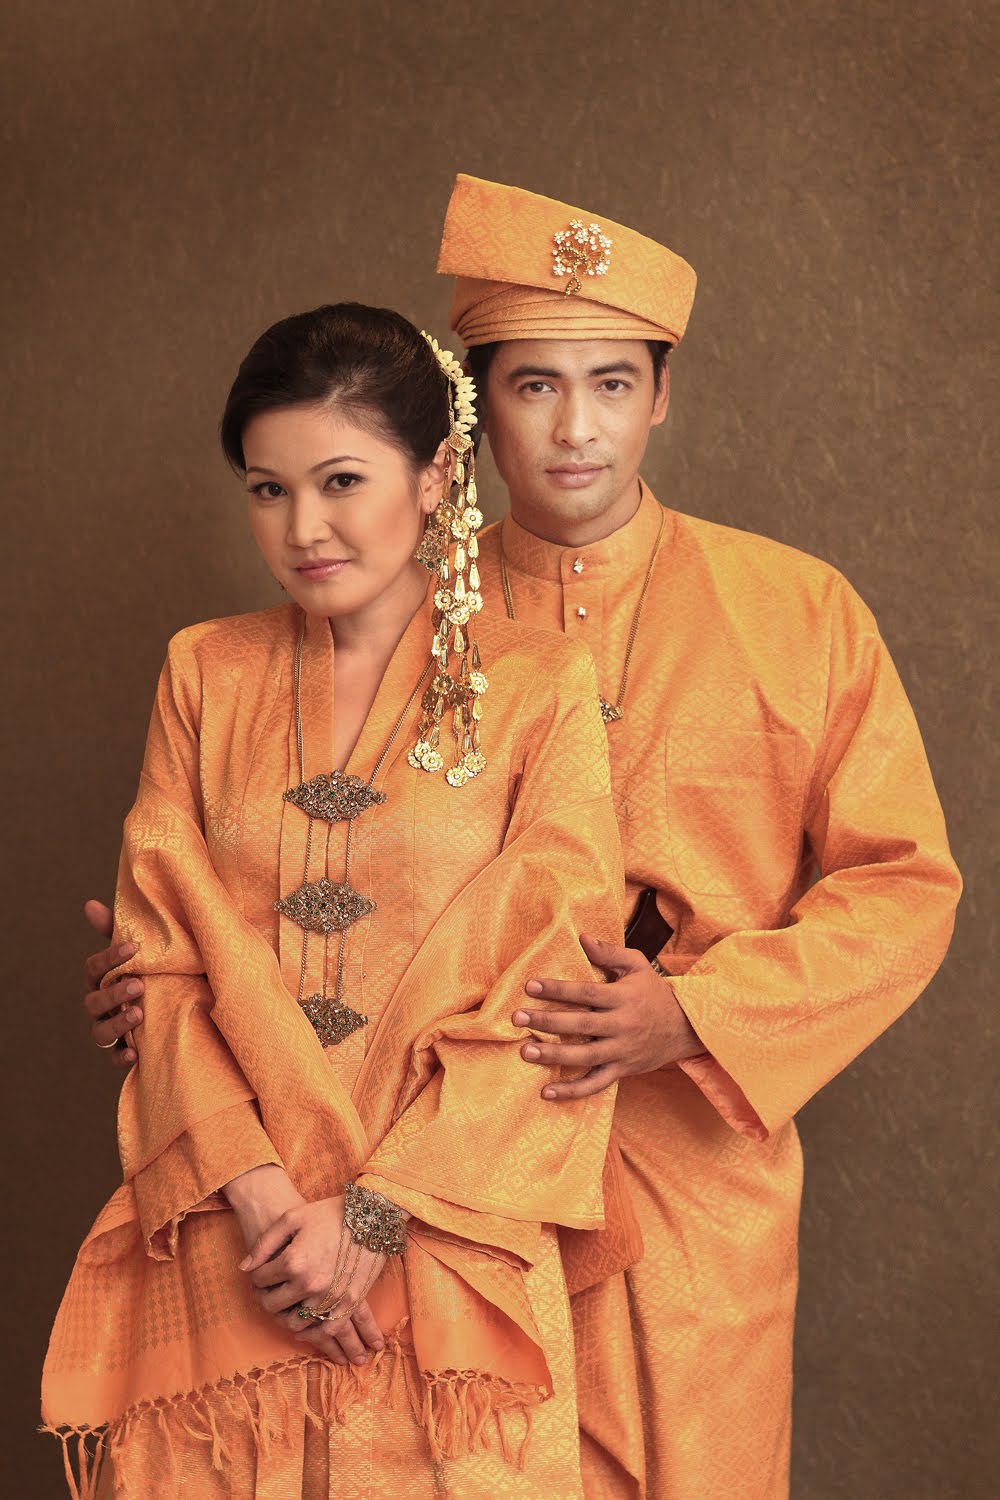 The Songket Affair: Malay Wedding Dress